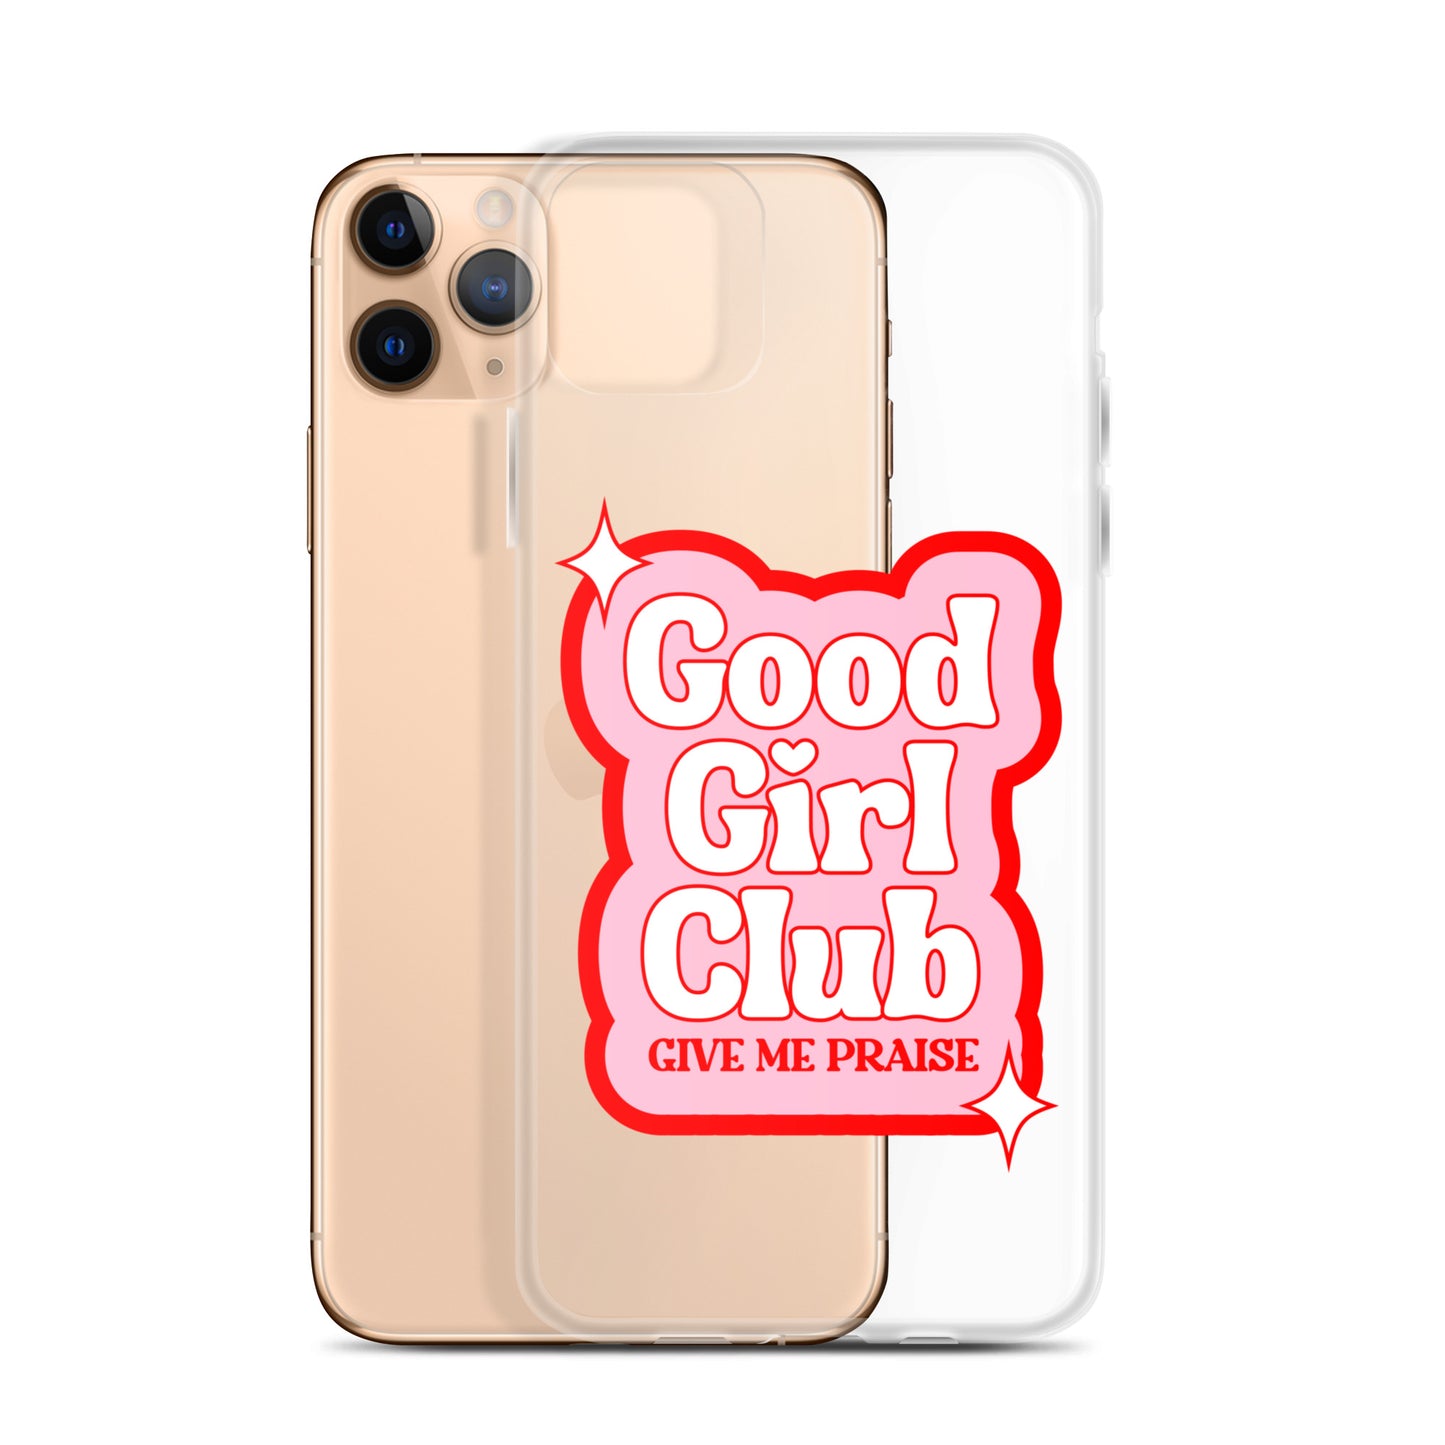 Good Girl Club iPhone Case